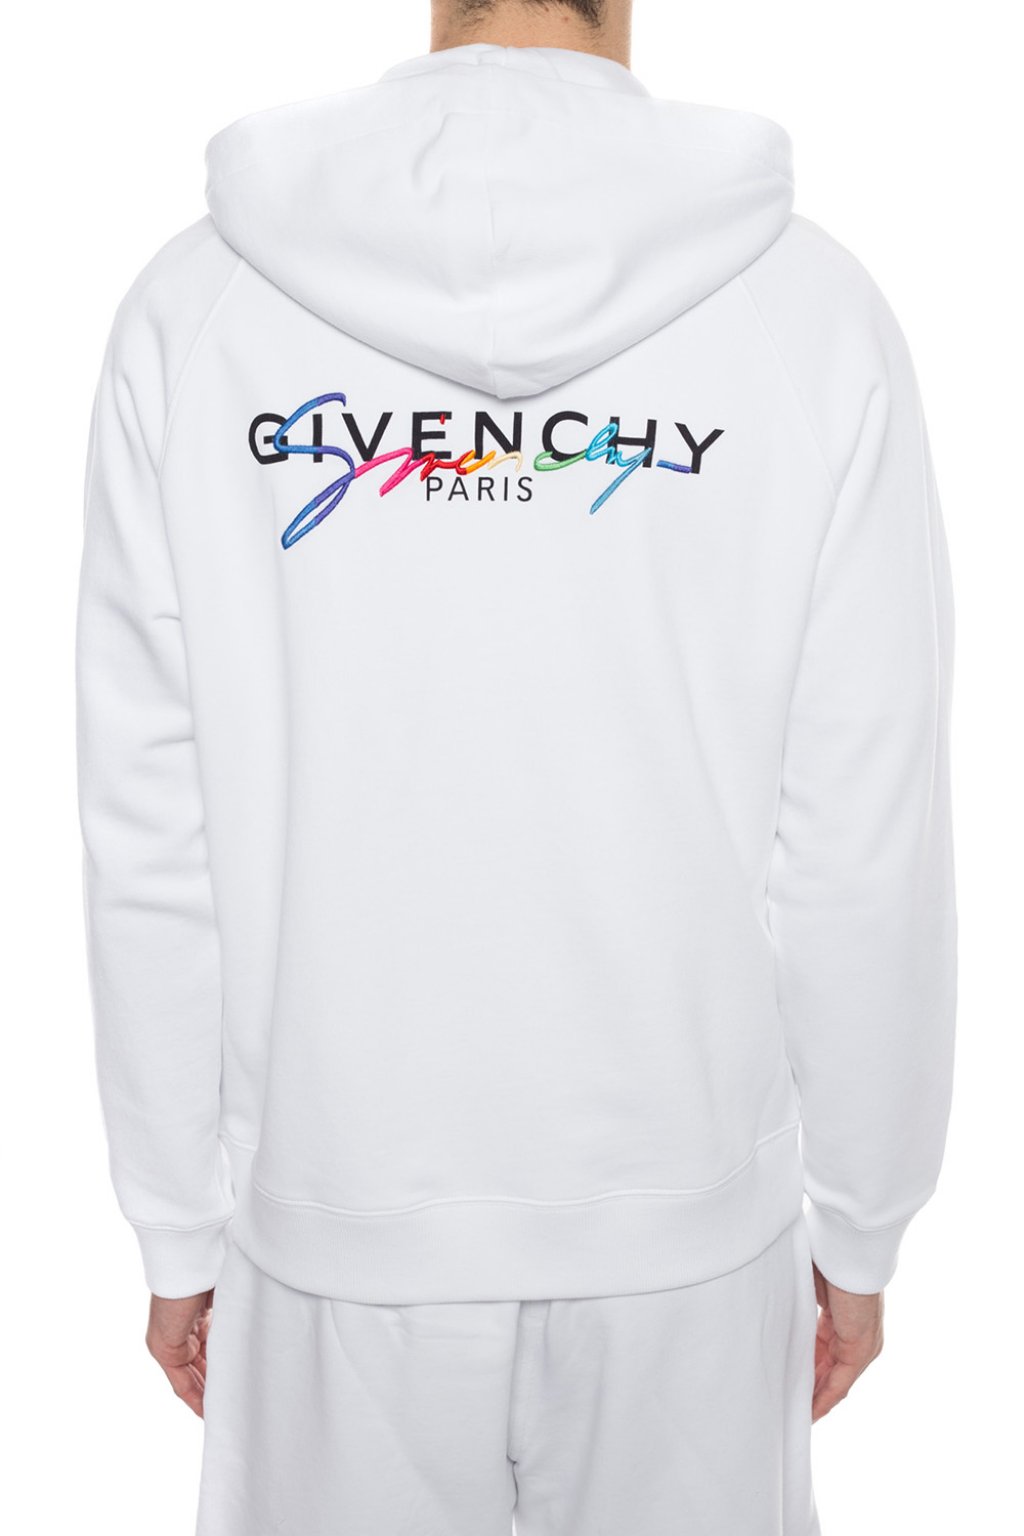 Givenchy Zip-up hoodie | Men's Clothing | Vitkac